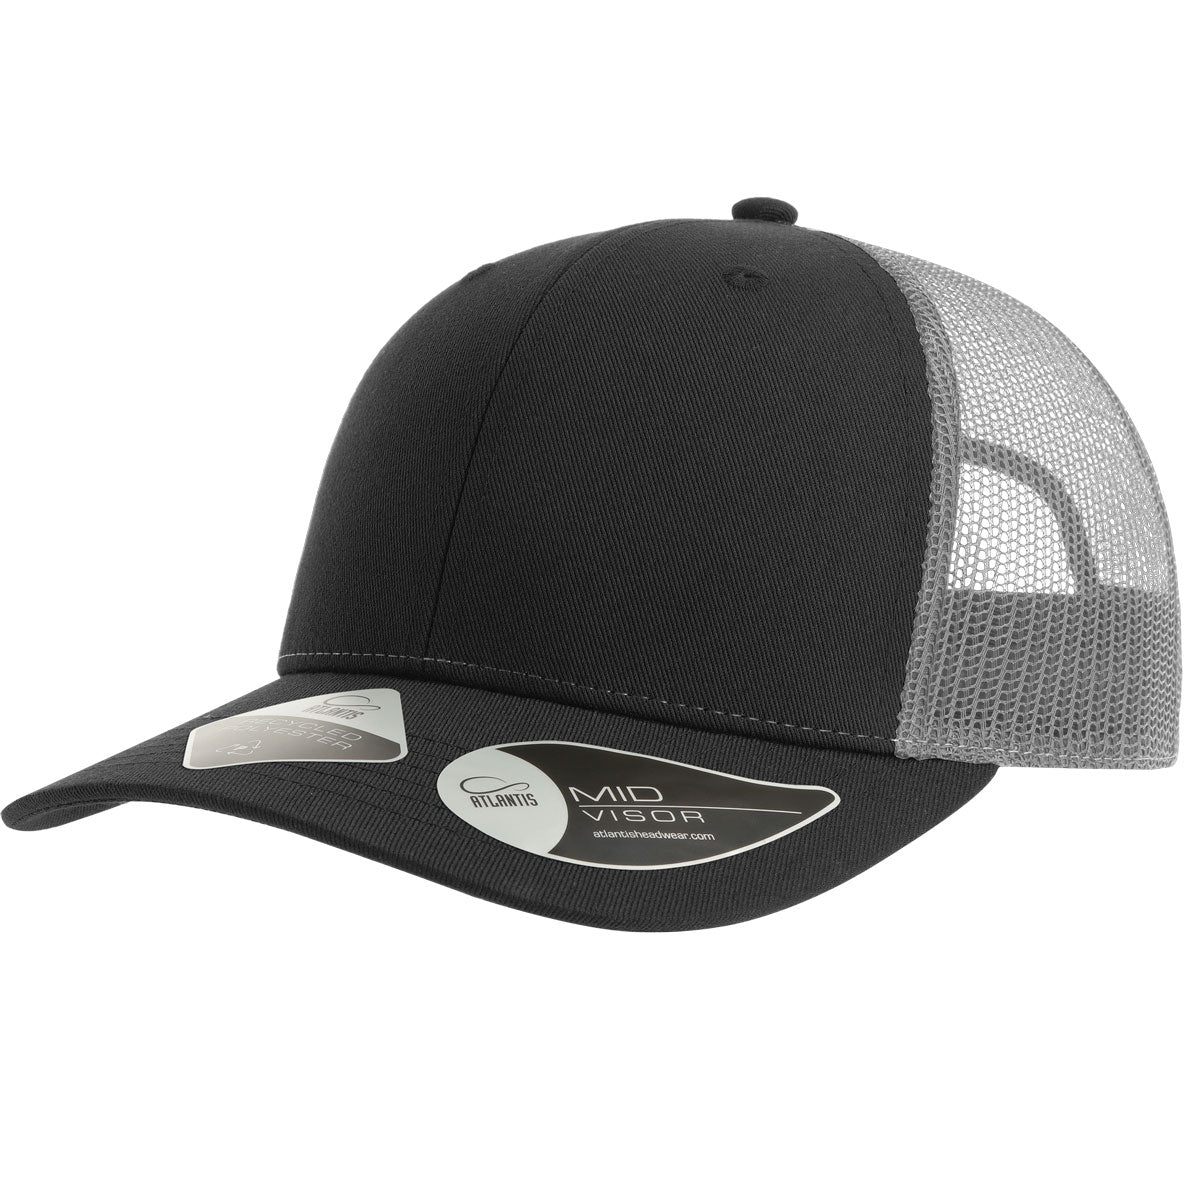 Customizable Atlantis Headwear Bryce Trucker Cap in black and dark gray.